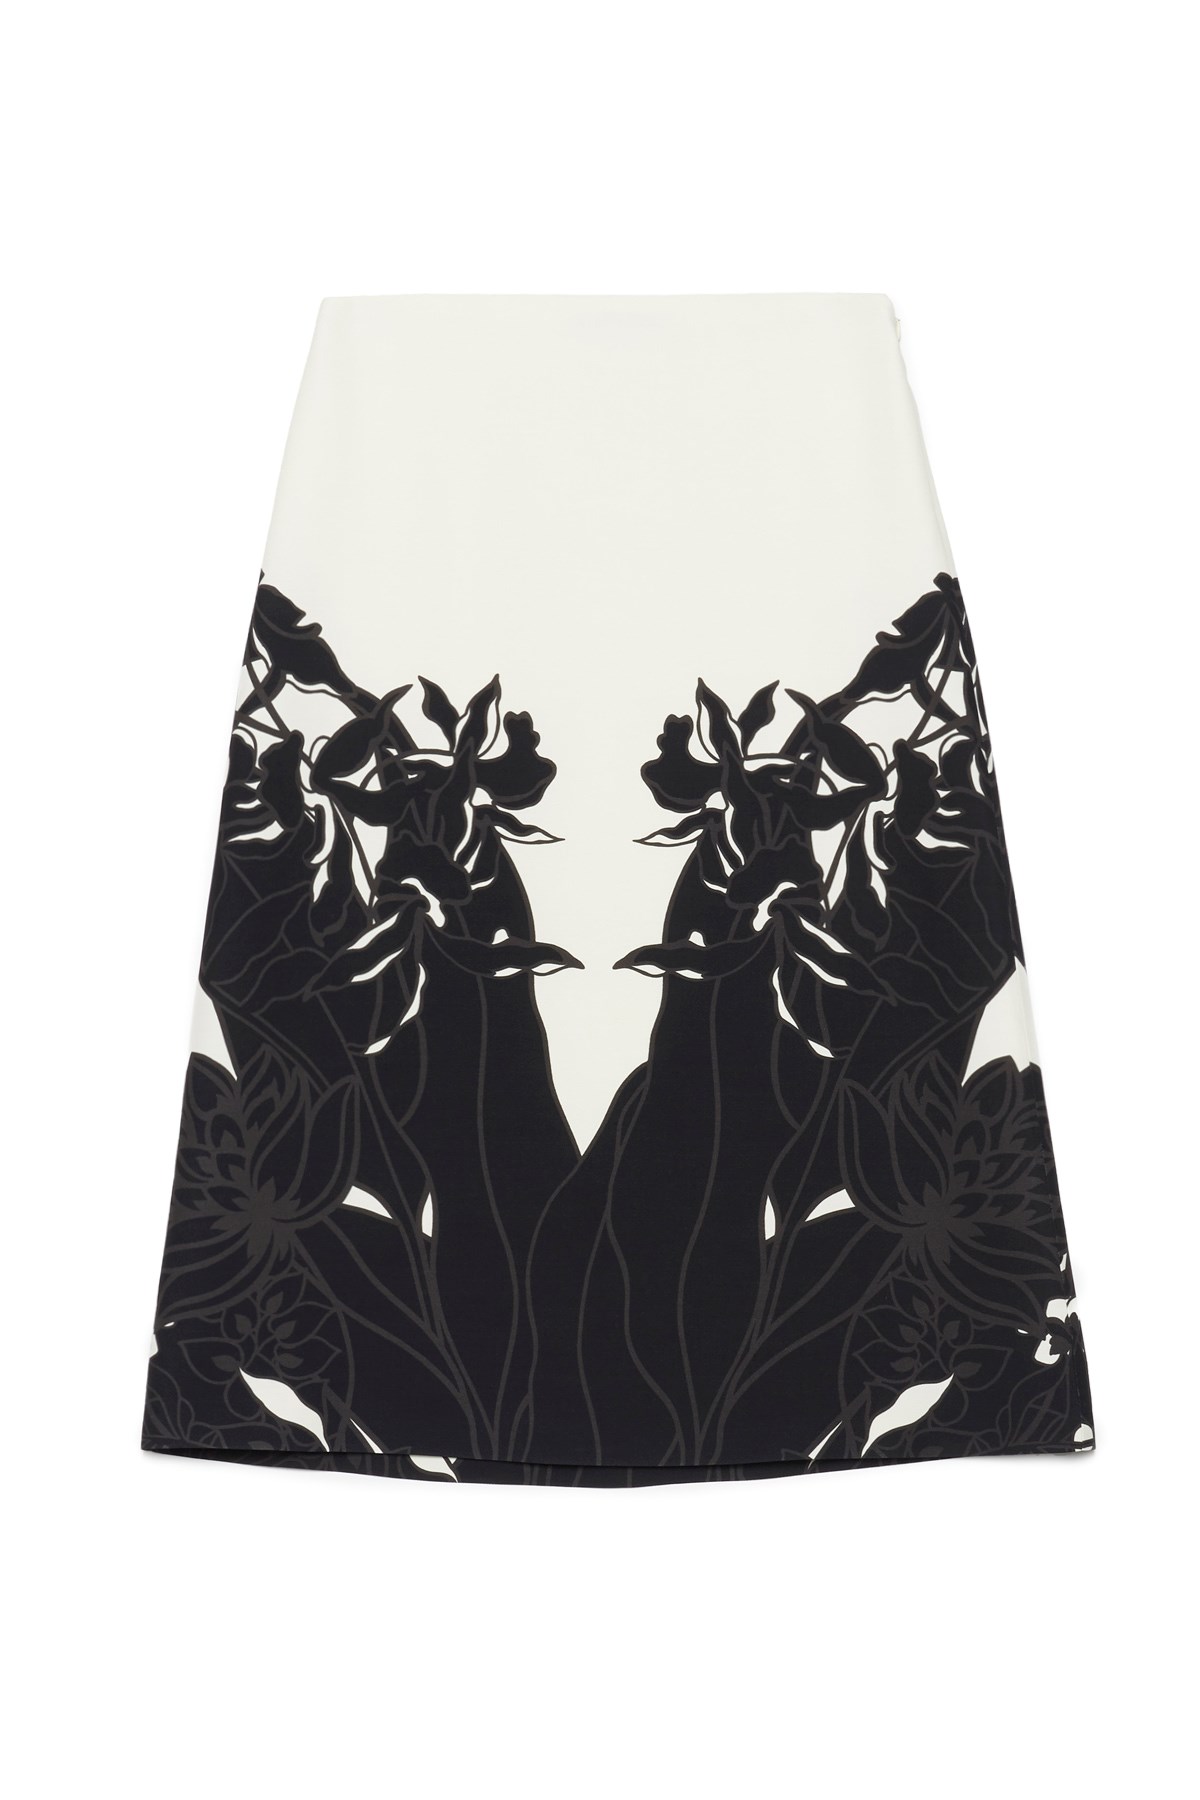 VALENTINO Floral Printed Skirt